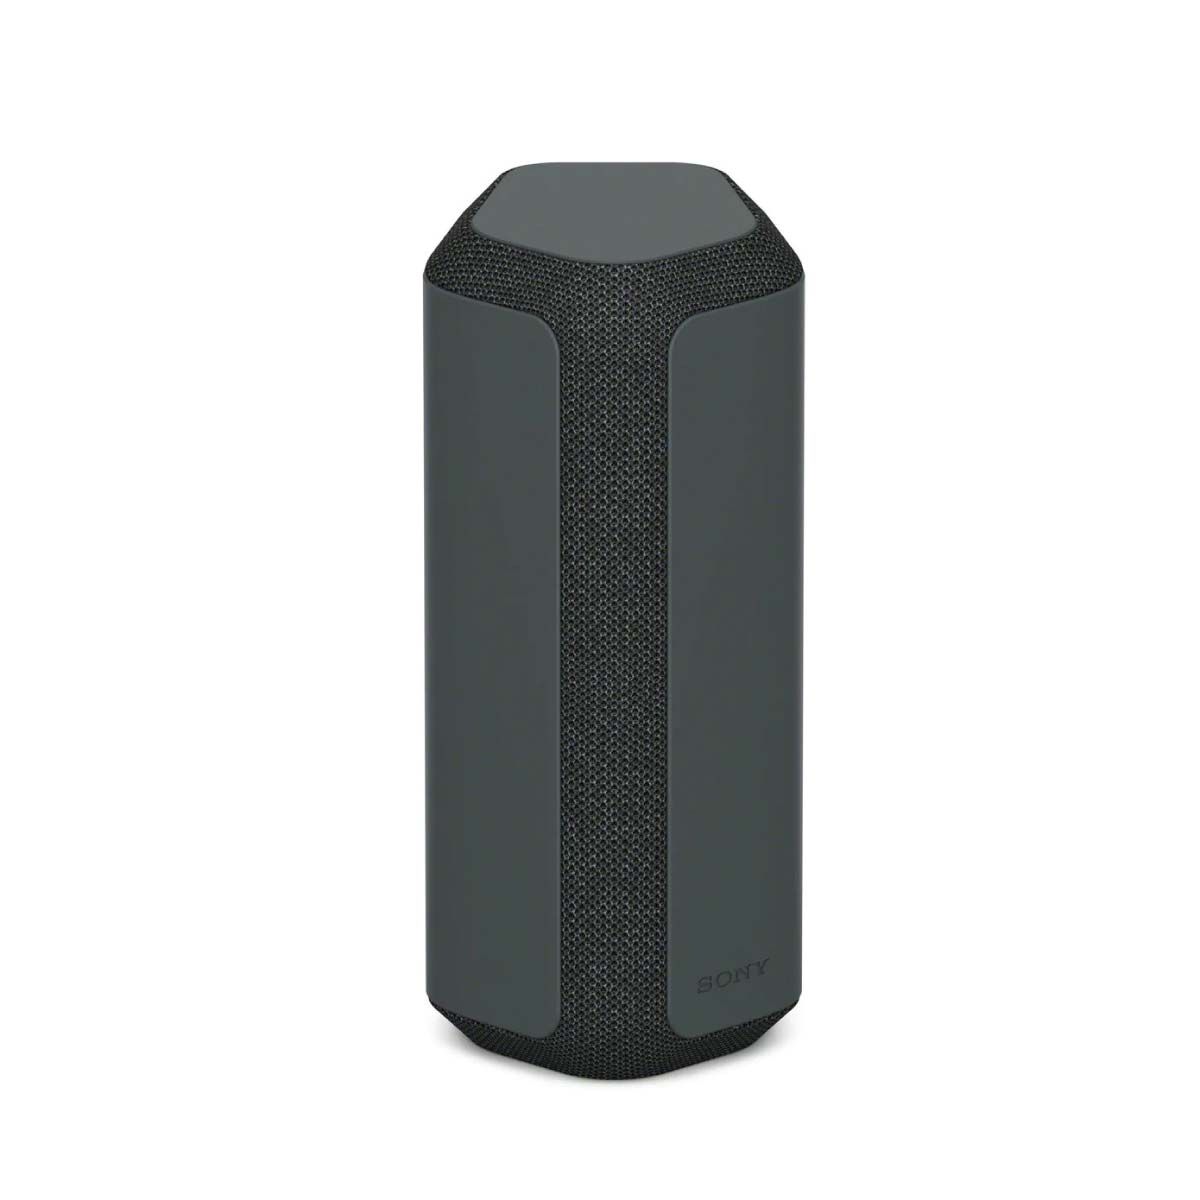 SONY ลำโพงบลูทูธ รุ่น SRS-XE300 Wireless Speakers Ambient Noise Sensing กันน้ำกันฝุ่น IP67